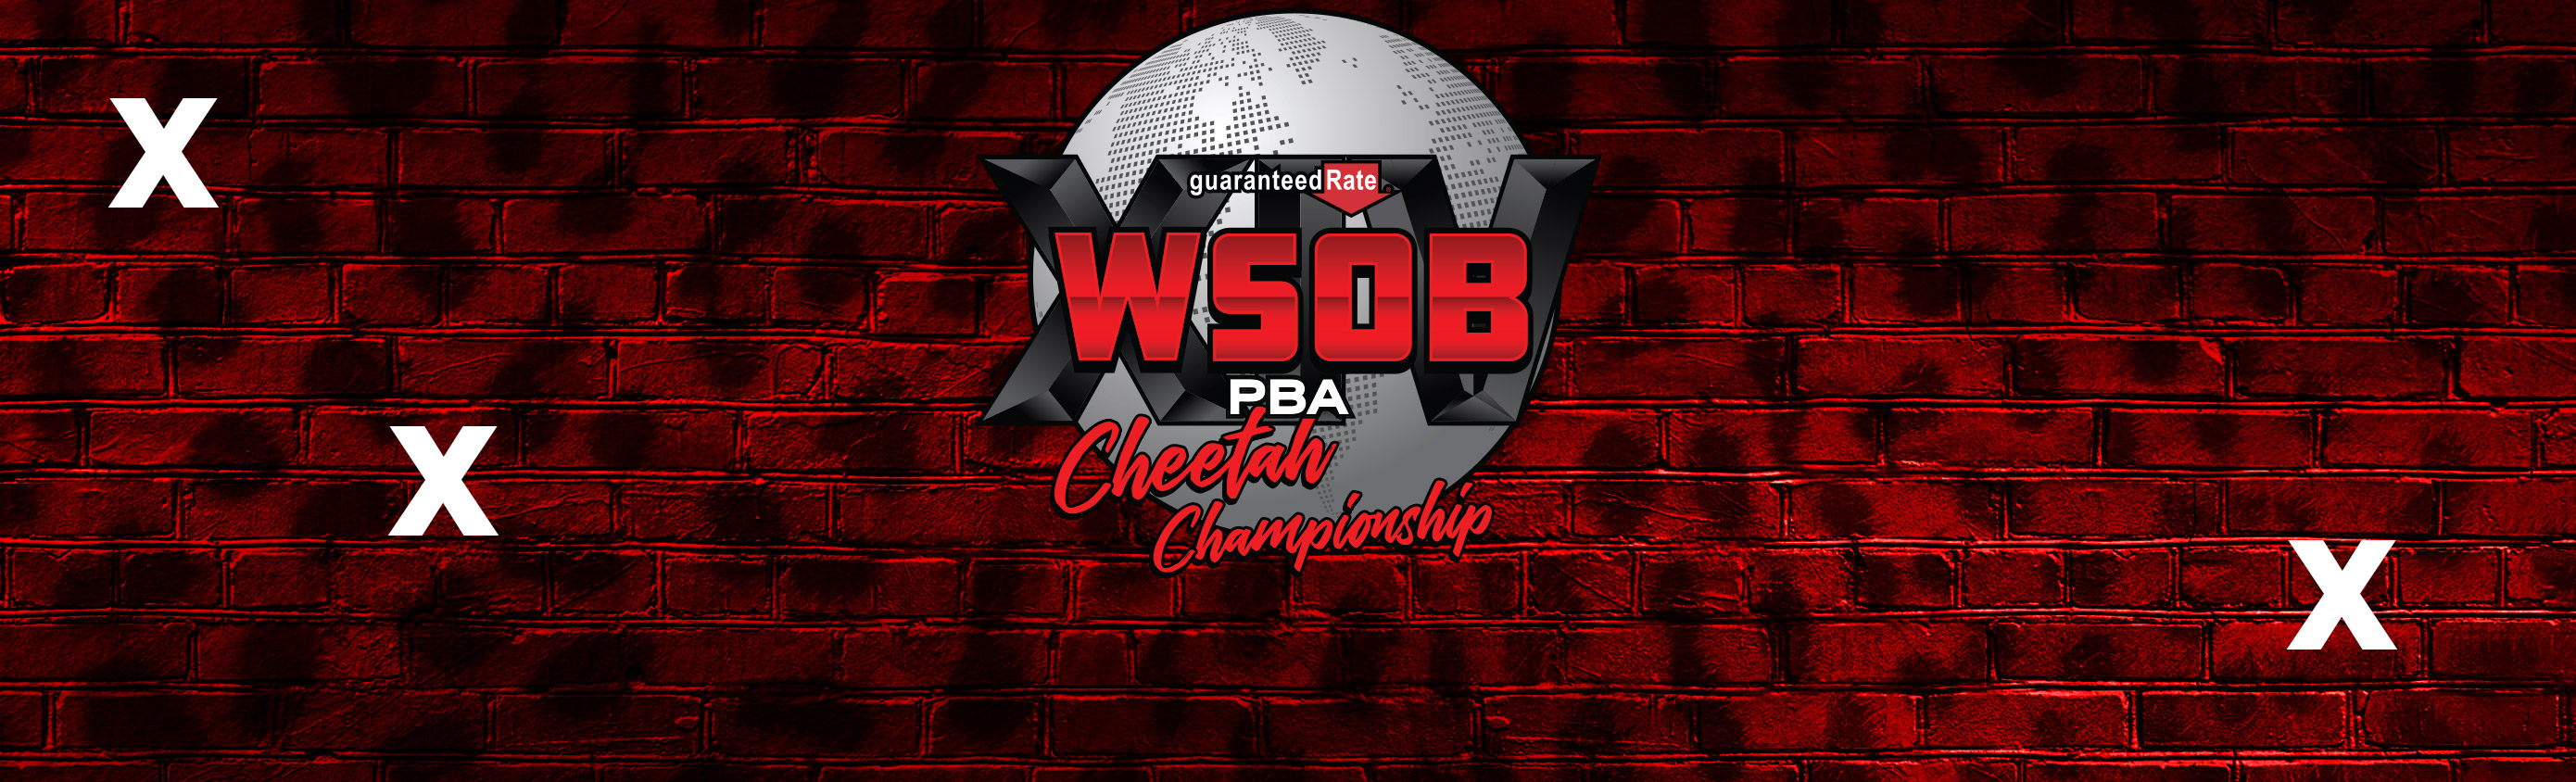 Guaranteed Rate PBA World Series of Bowling XIV Cheetah Championship PBA